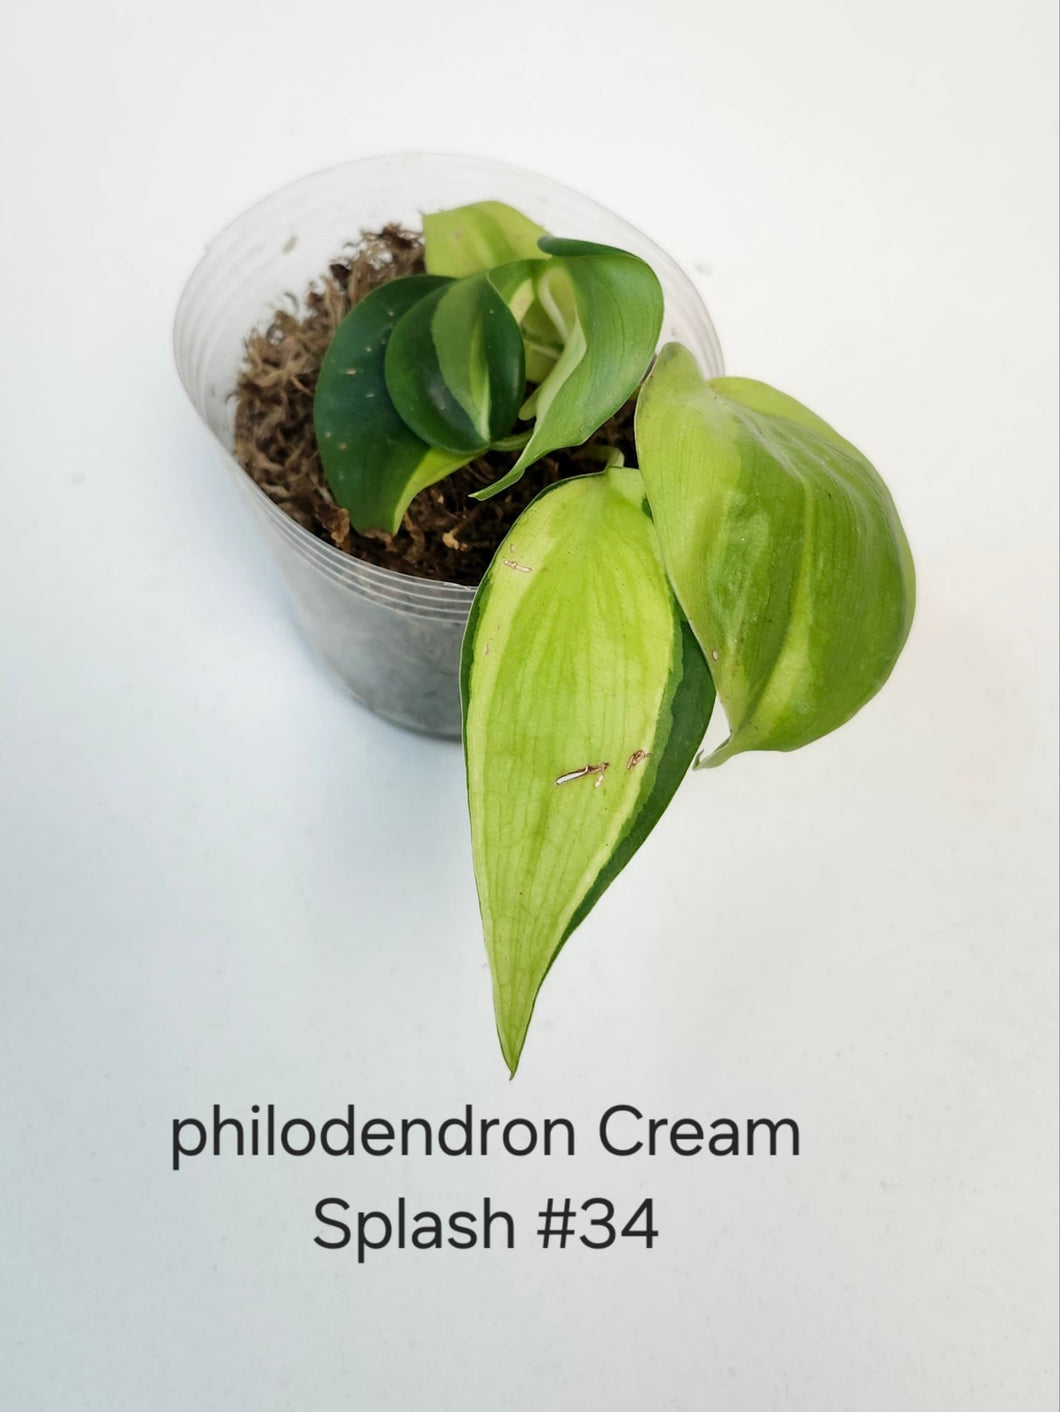 Philodendron cream splash #34